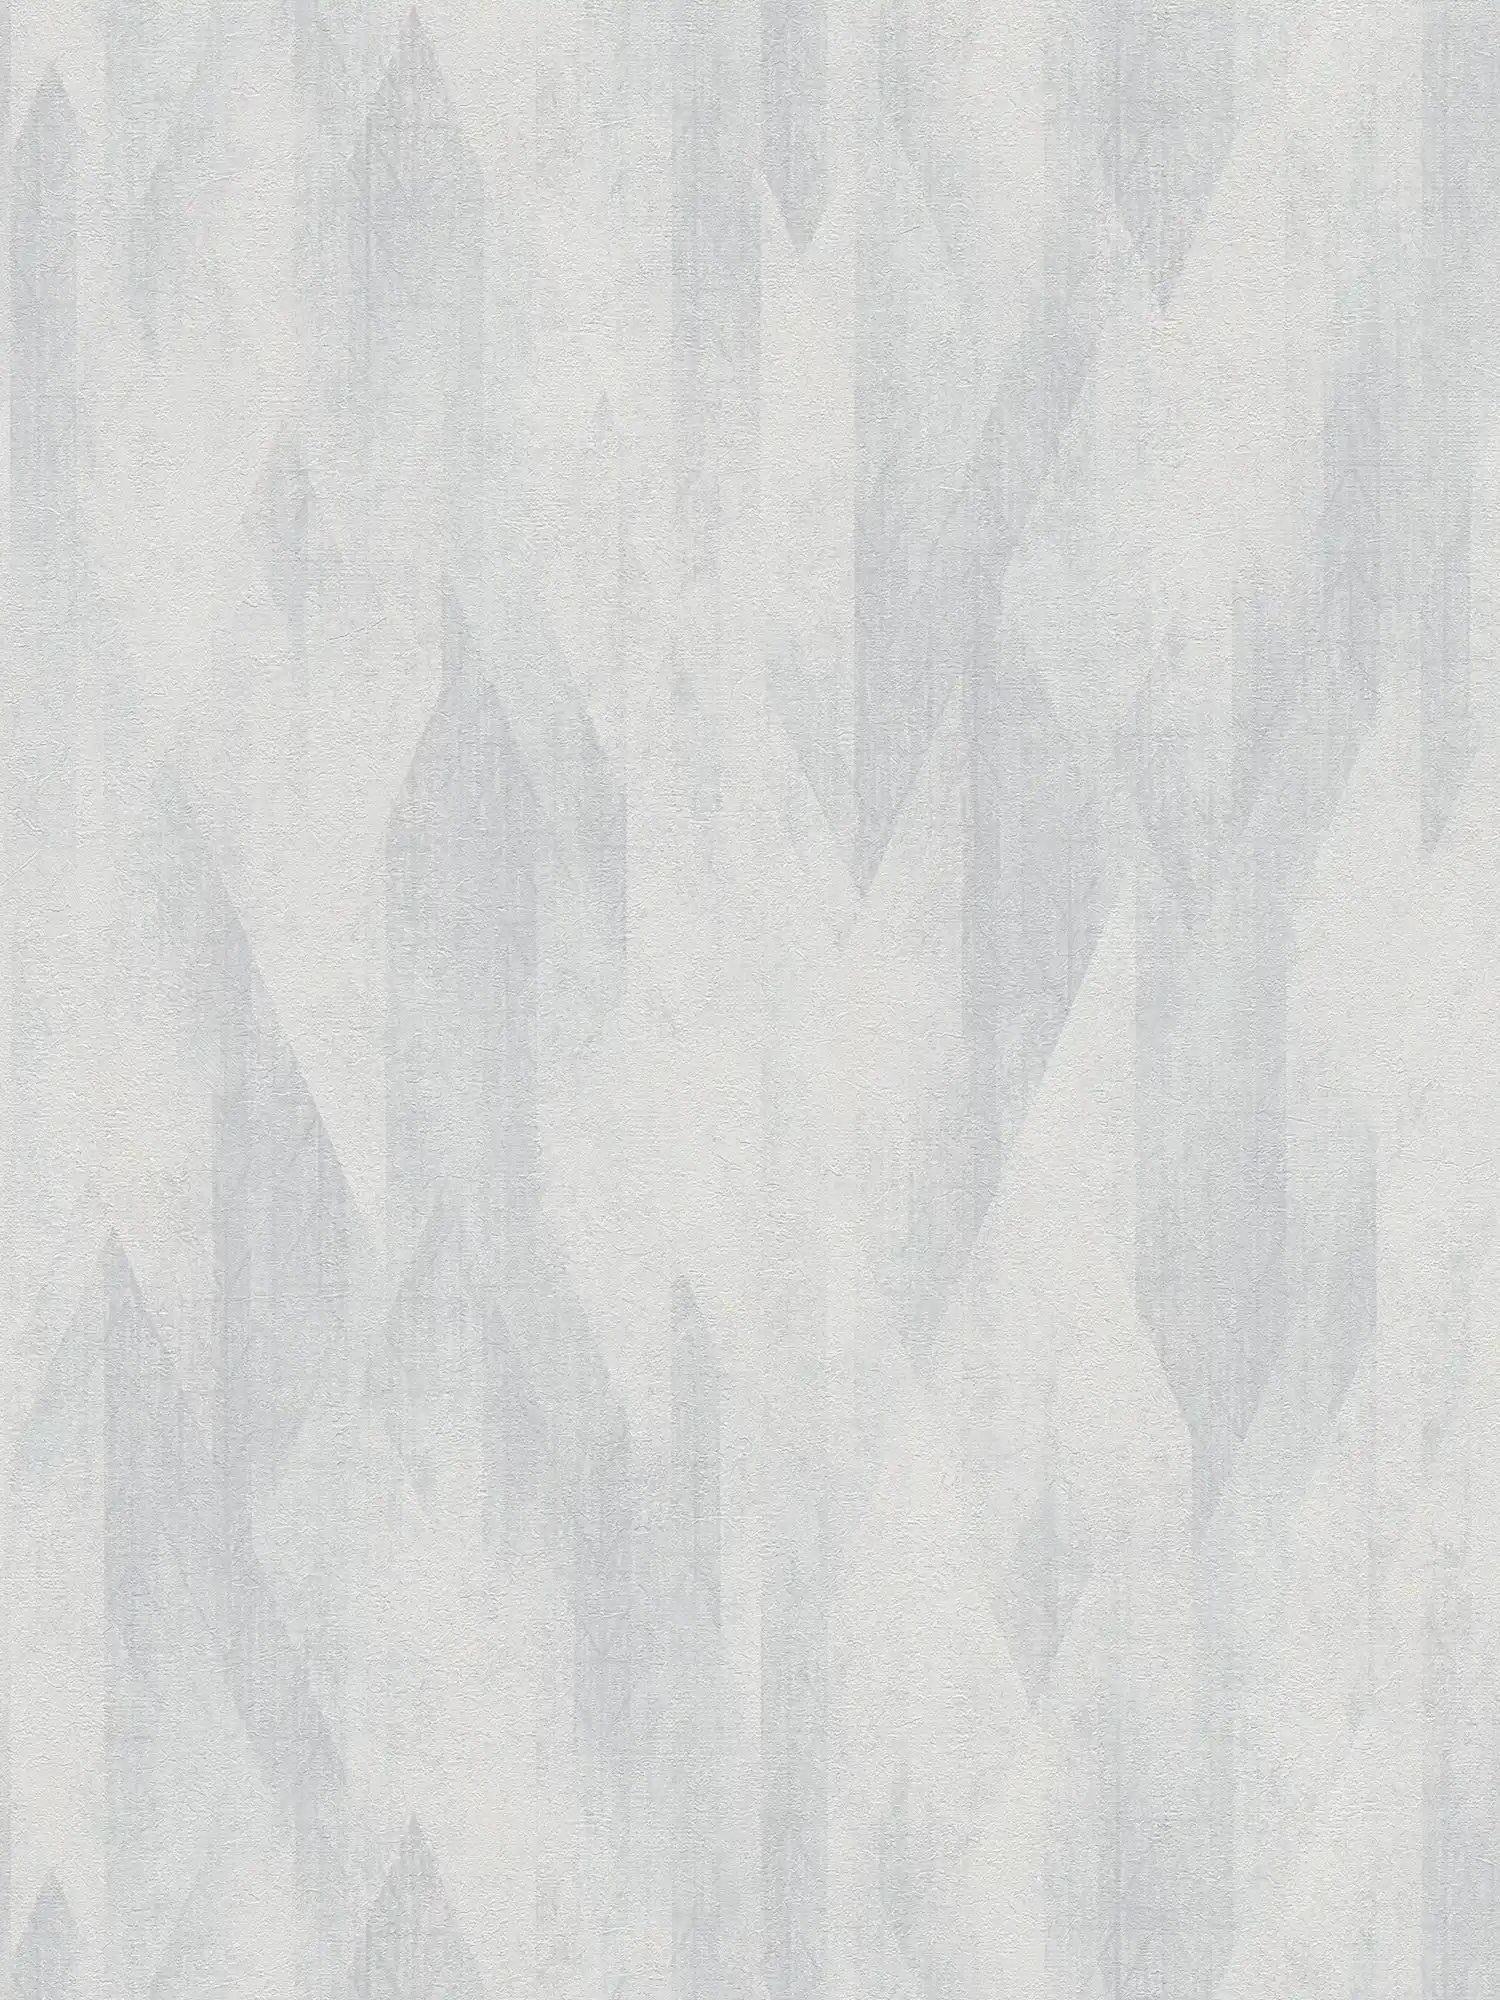 Papel pintado tejido-no tejido con sutiles rombos - gris, blanco
